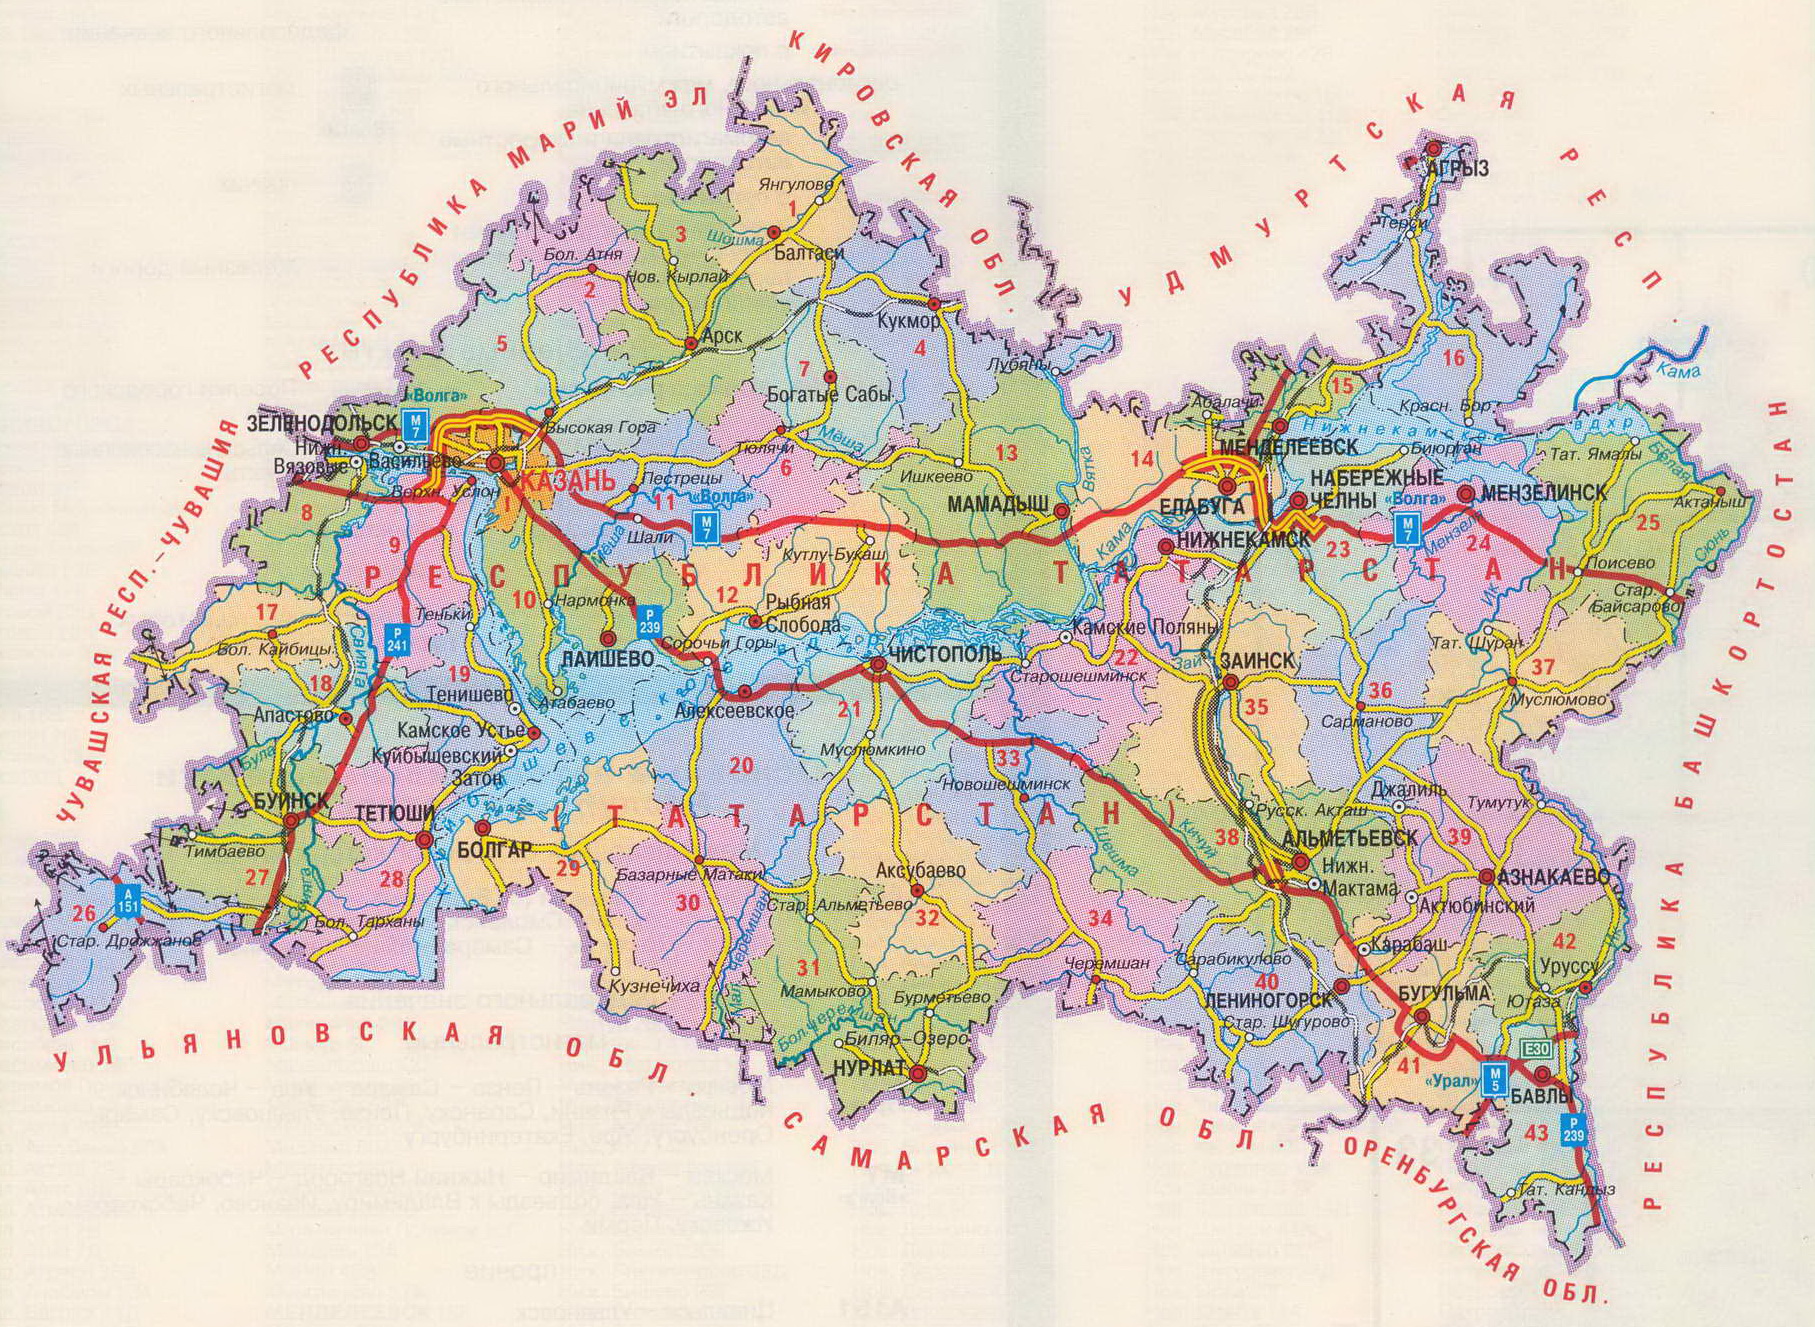  Карта республики Татарстан. Карта Татарстана с границами районов, A0 - 